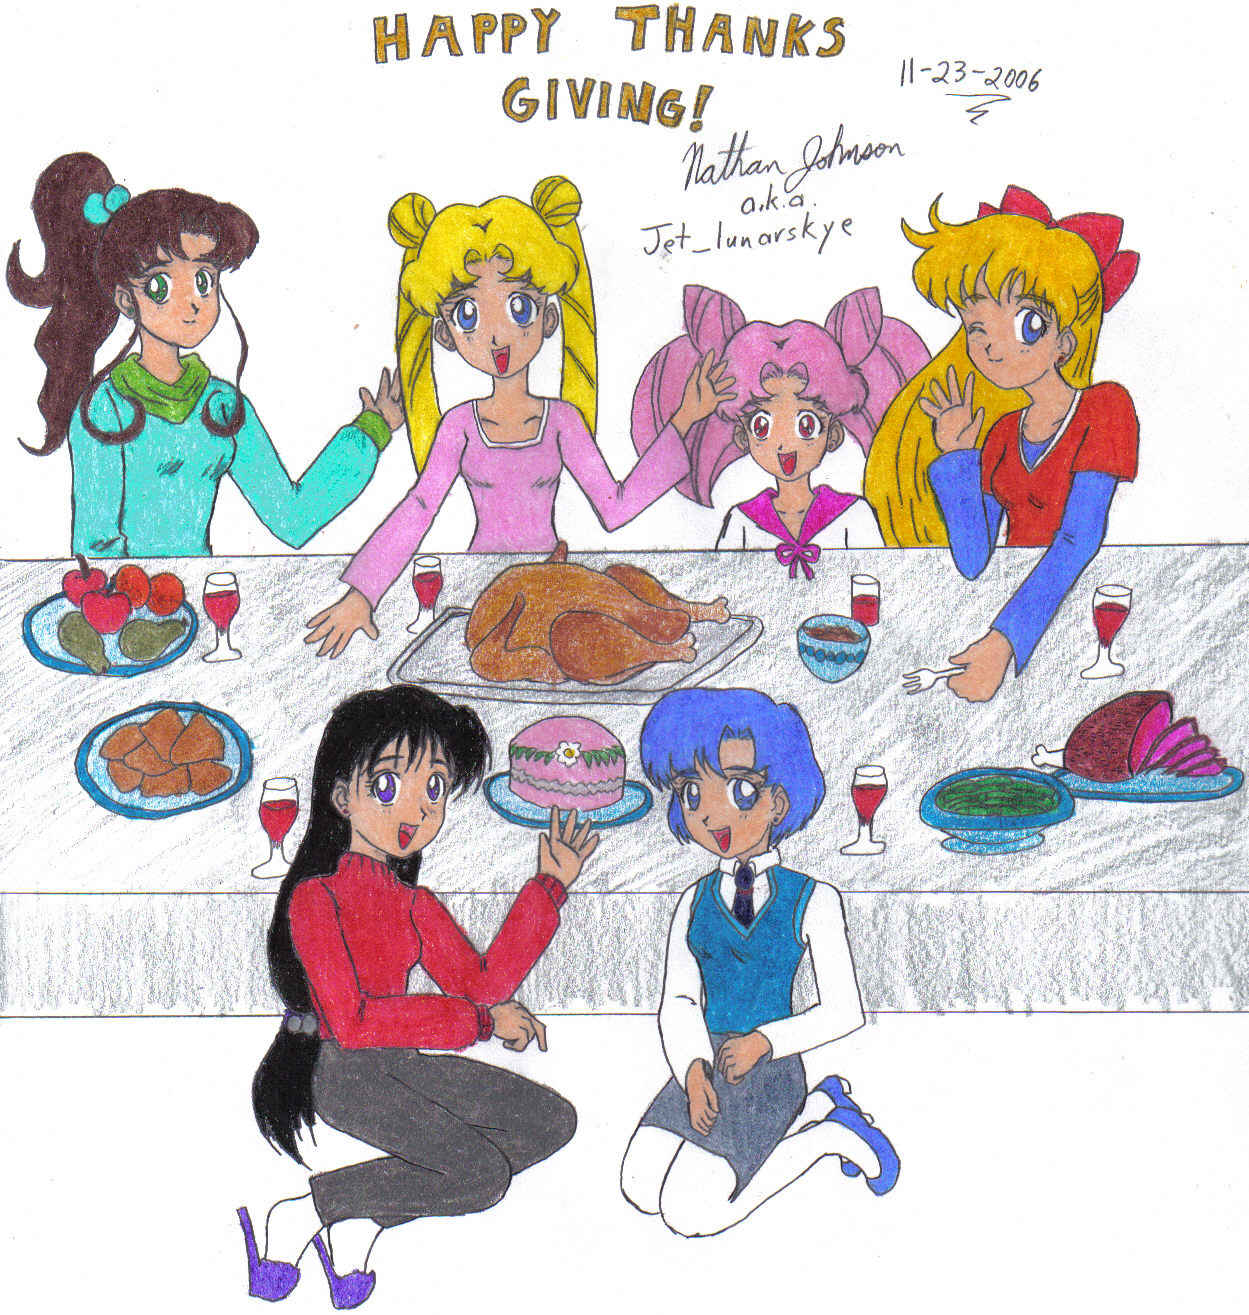 A Sailor Thanksgiving by Jet_lunarskye